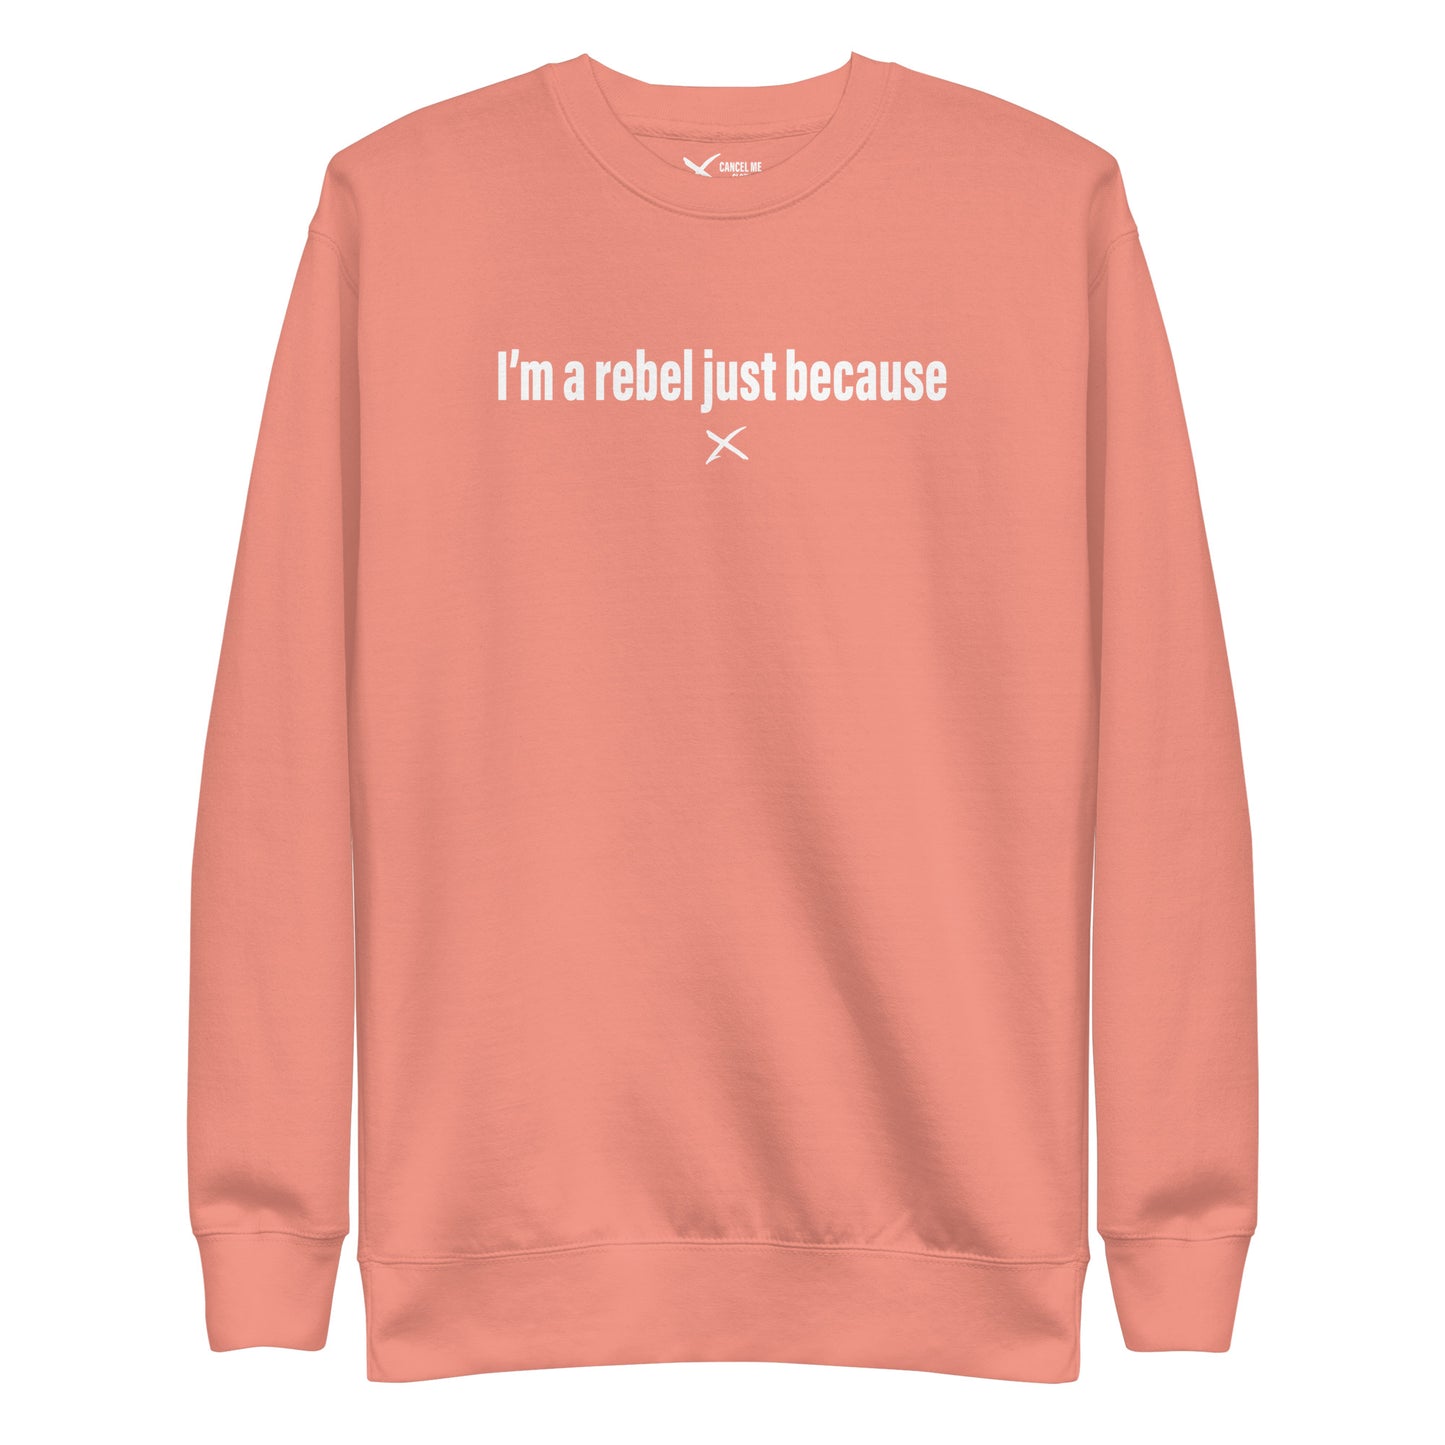 I'm a rebel just because - Sweatshirt